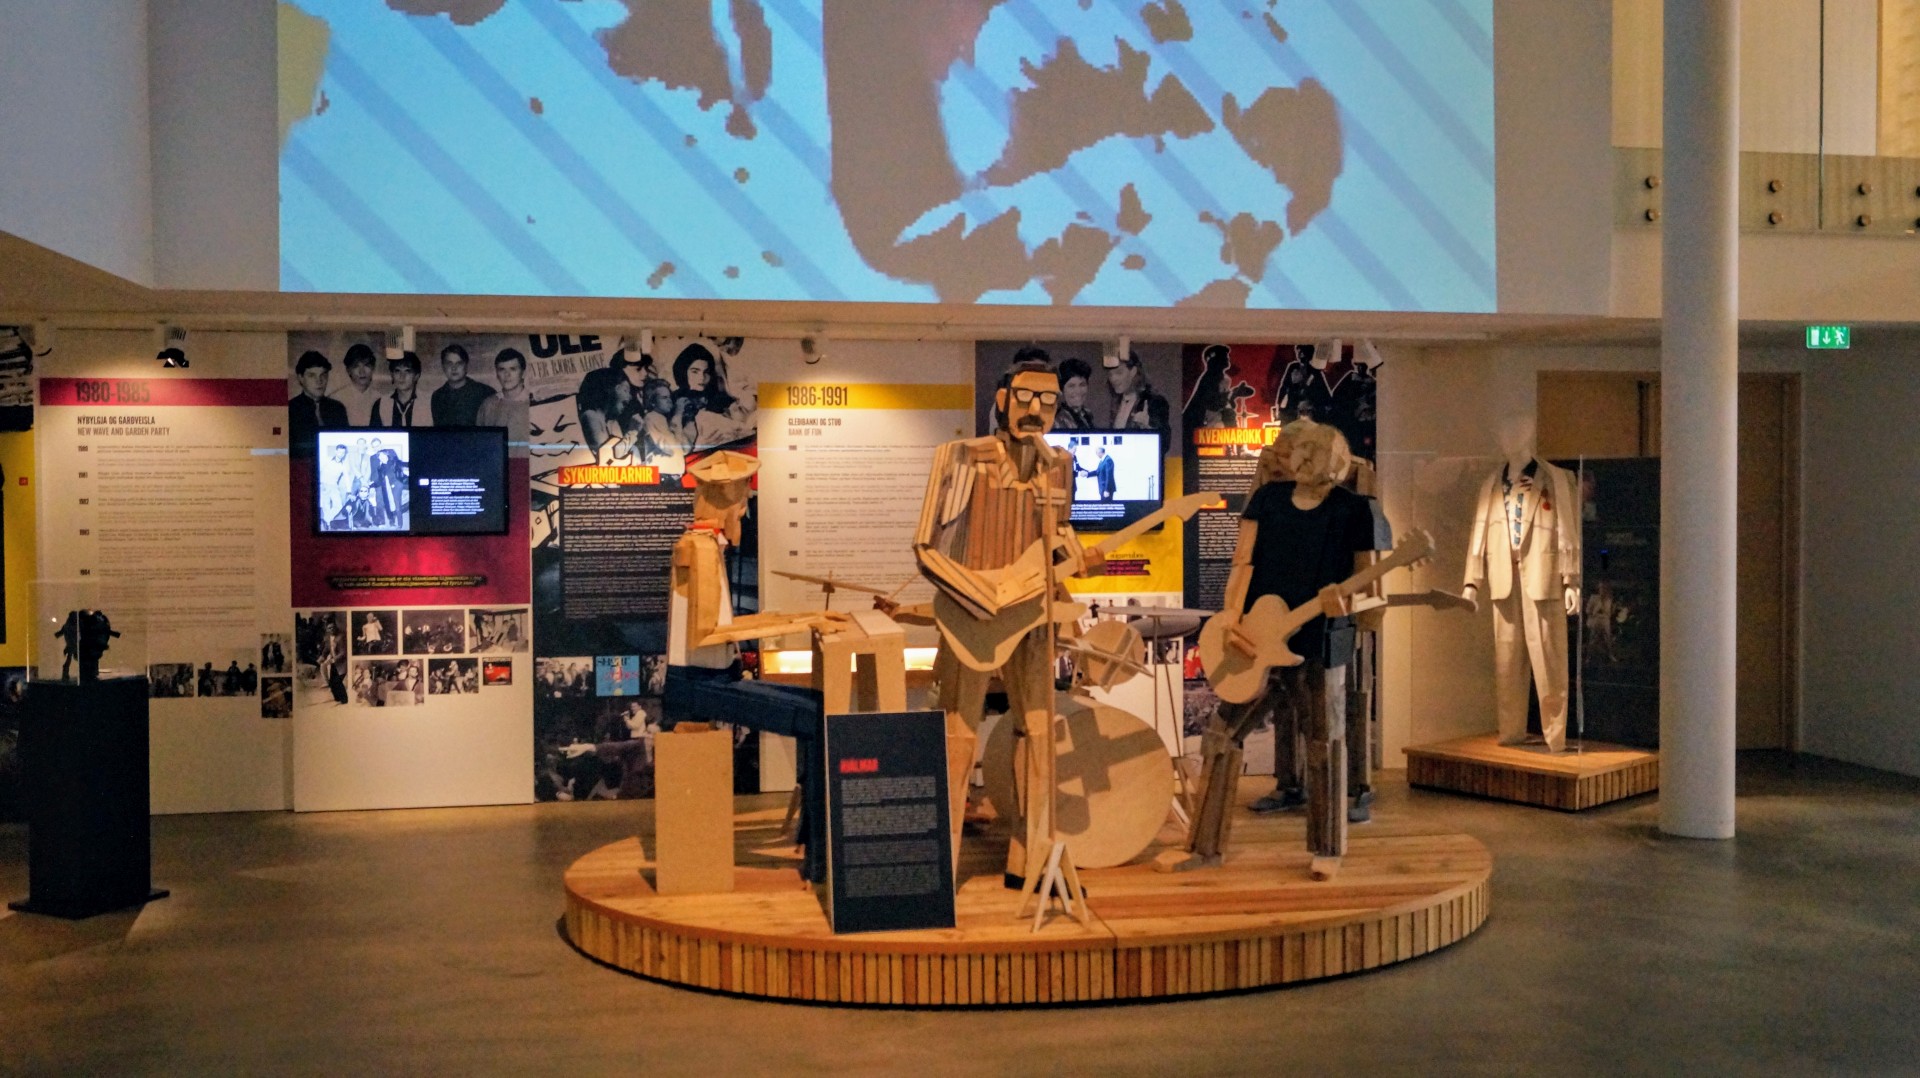 Exhibition in Hljomaholl